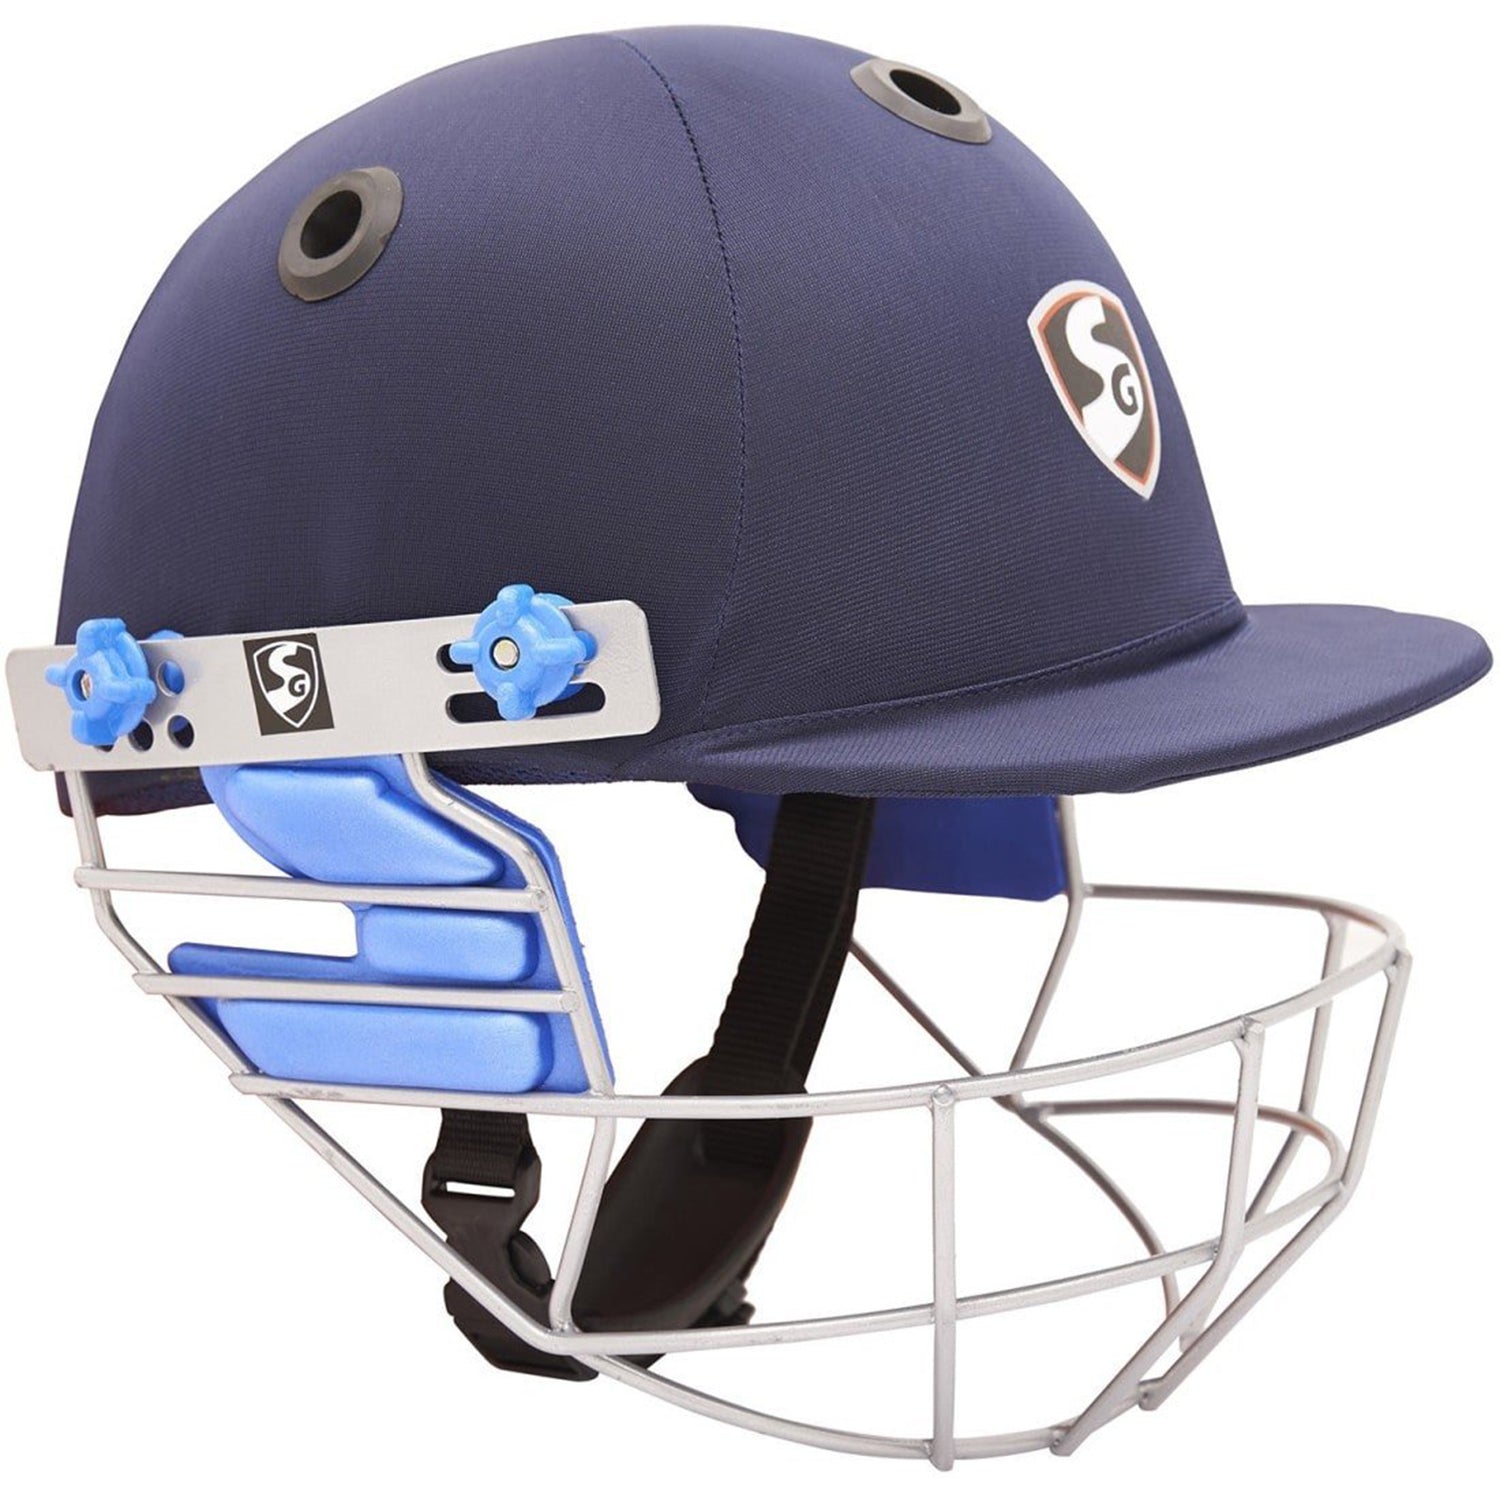 SG Aero-Select Professional Cricket Helmet - Best Price online Prokicksports.com